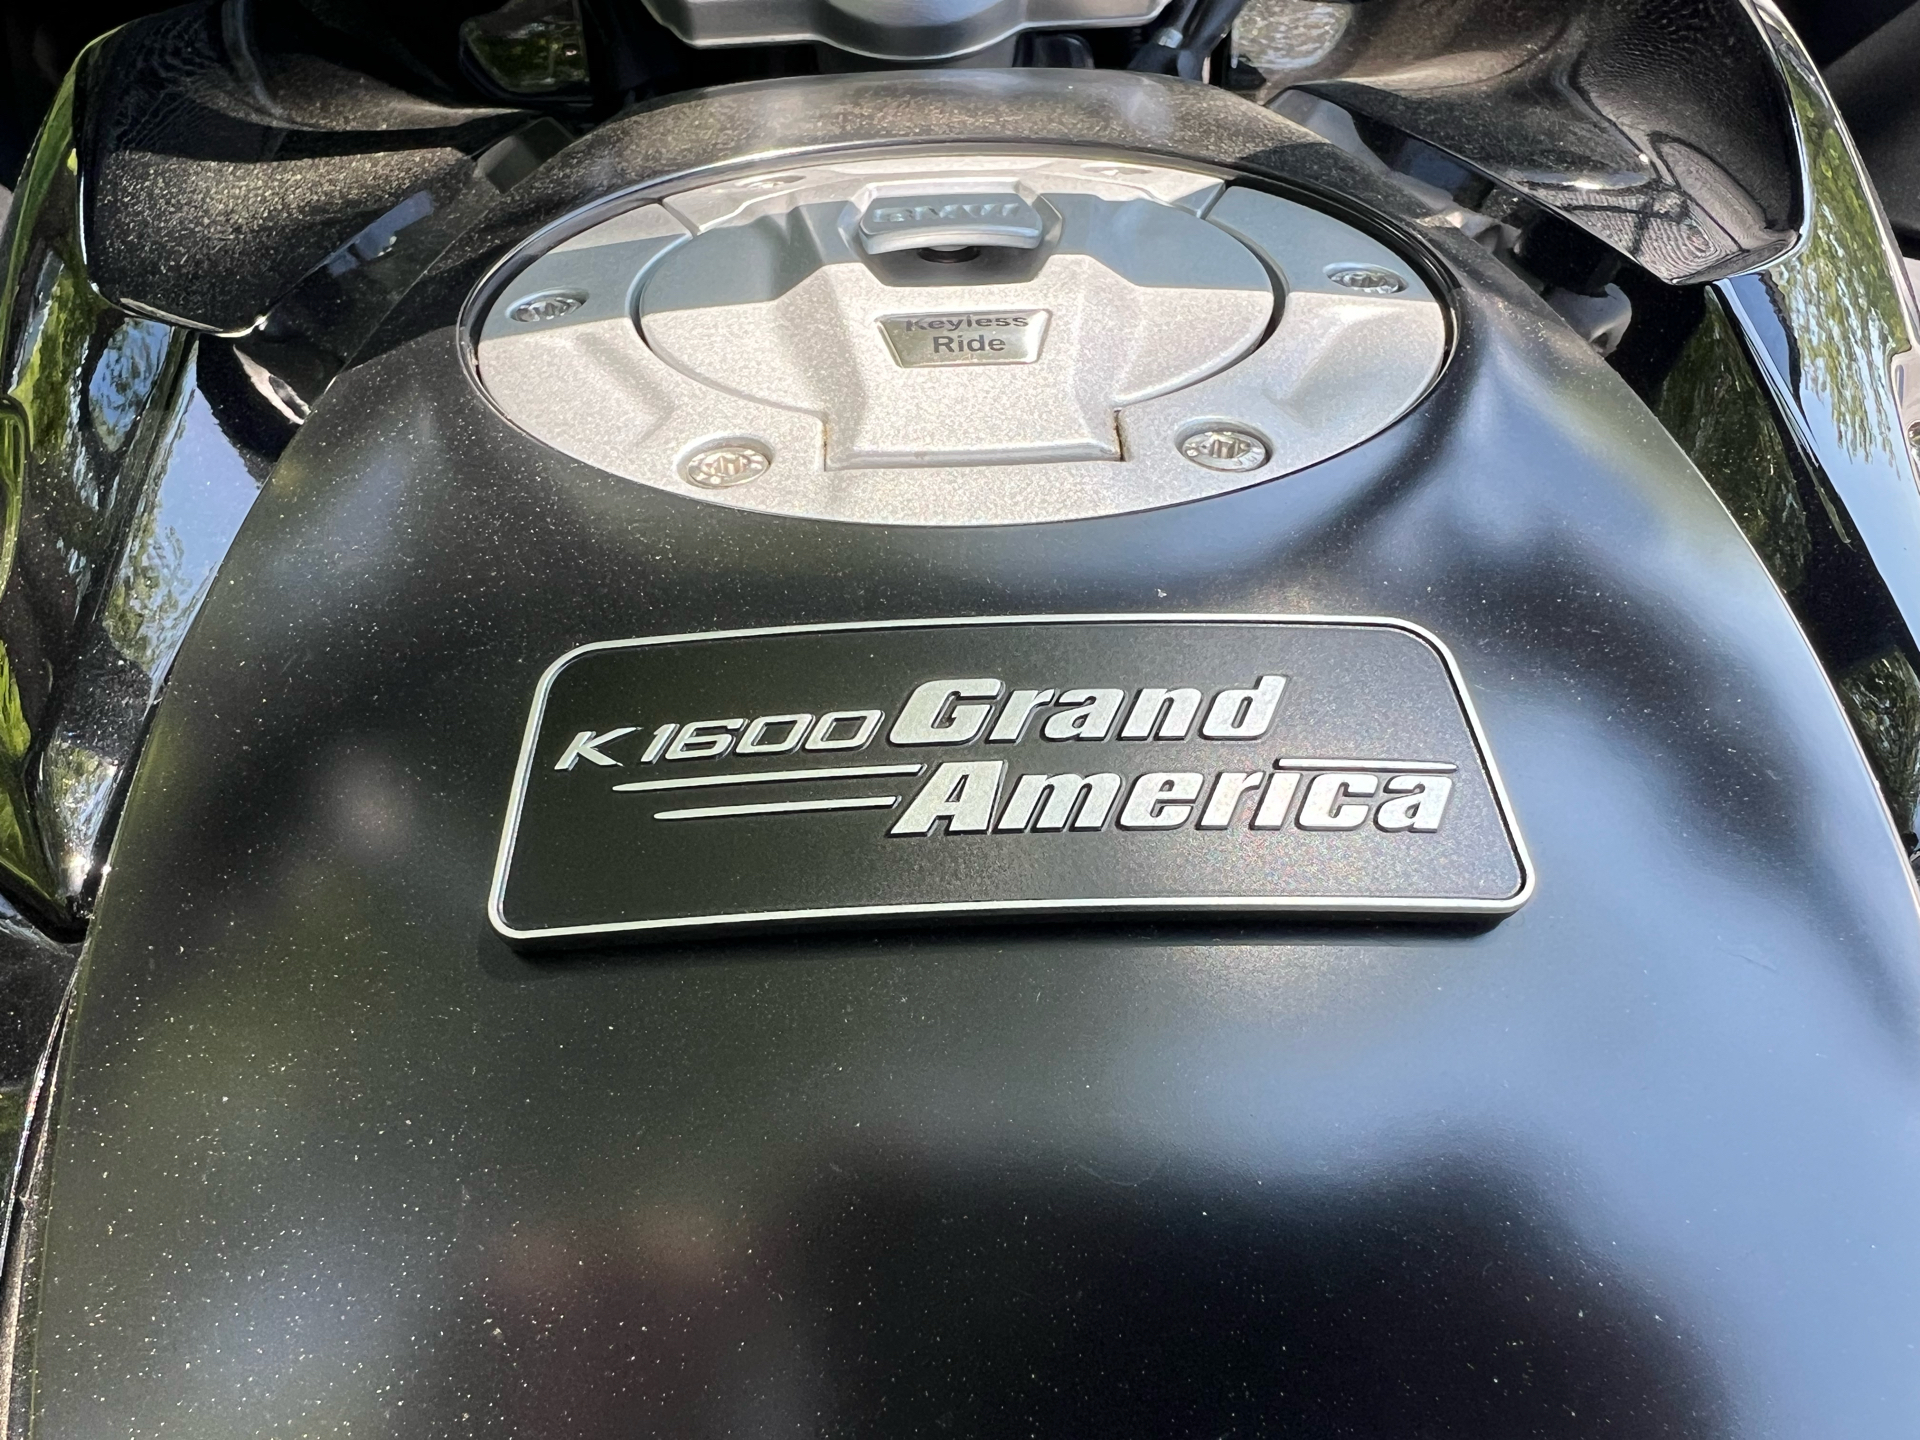 2018 BMW K 1600 Grand America in Hendersonville, North Carolina - Photo 9